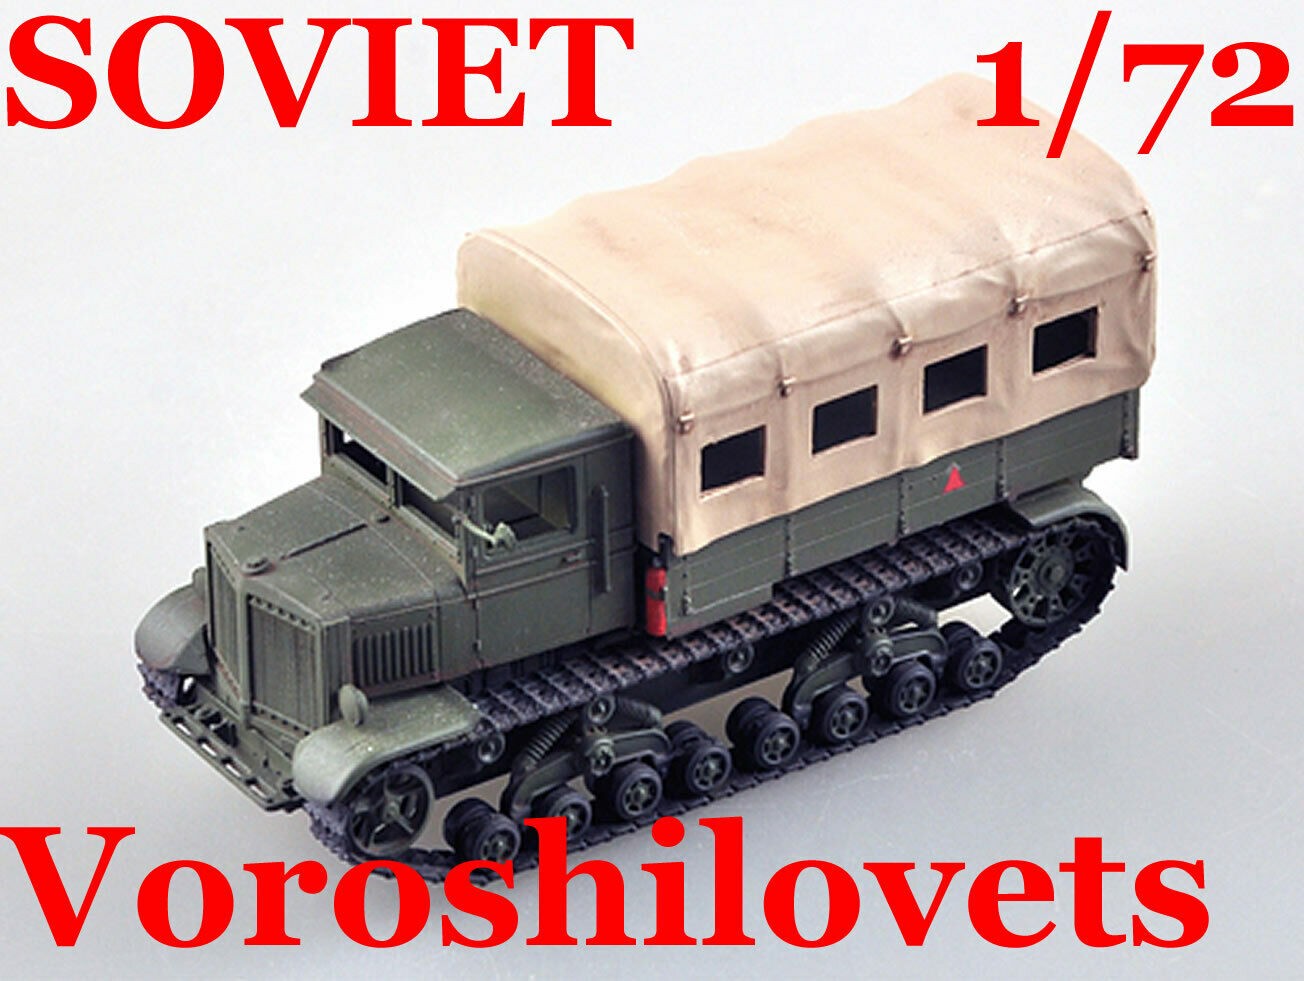 Easy Model 35112 Voroshilovets SOVIET 1941  1:72